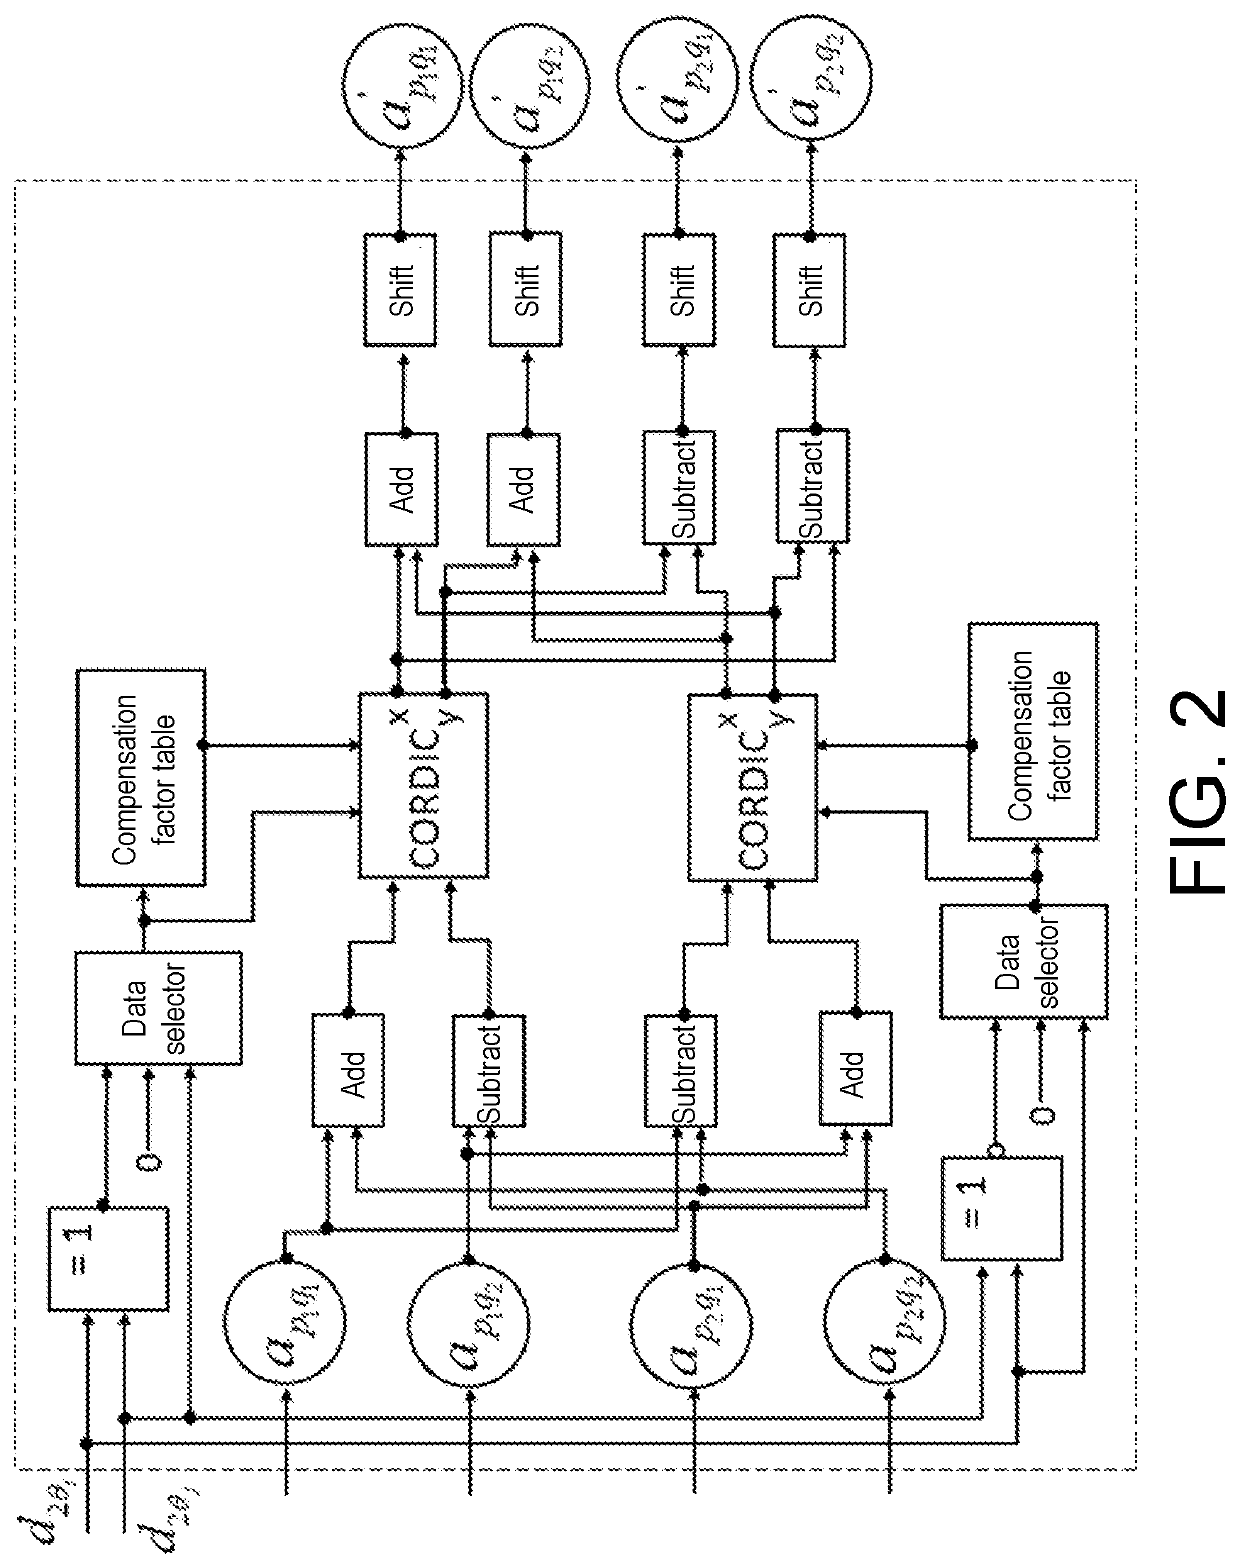 Method of realizing accelerated parallel jacobi computing for FPGA